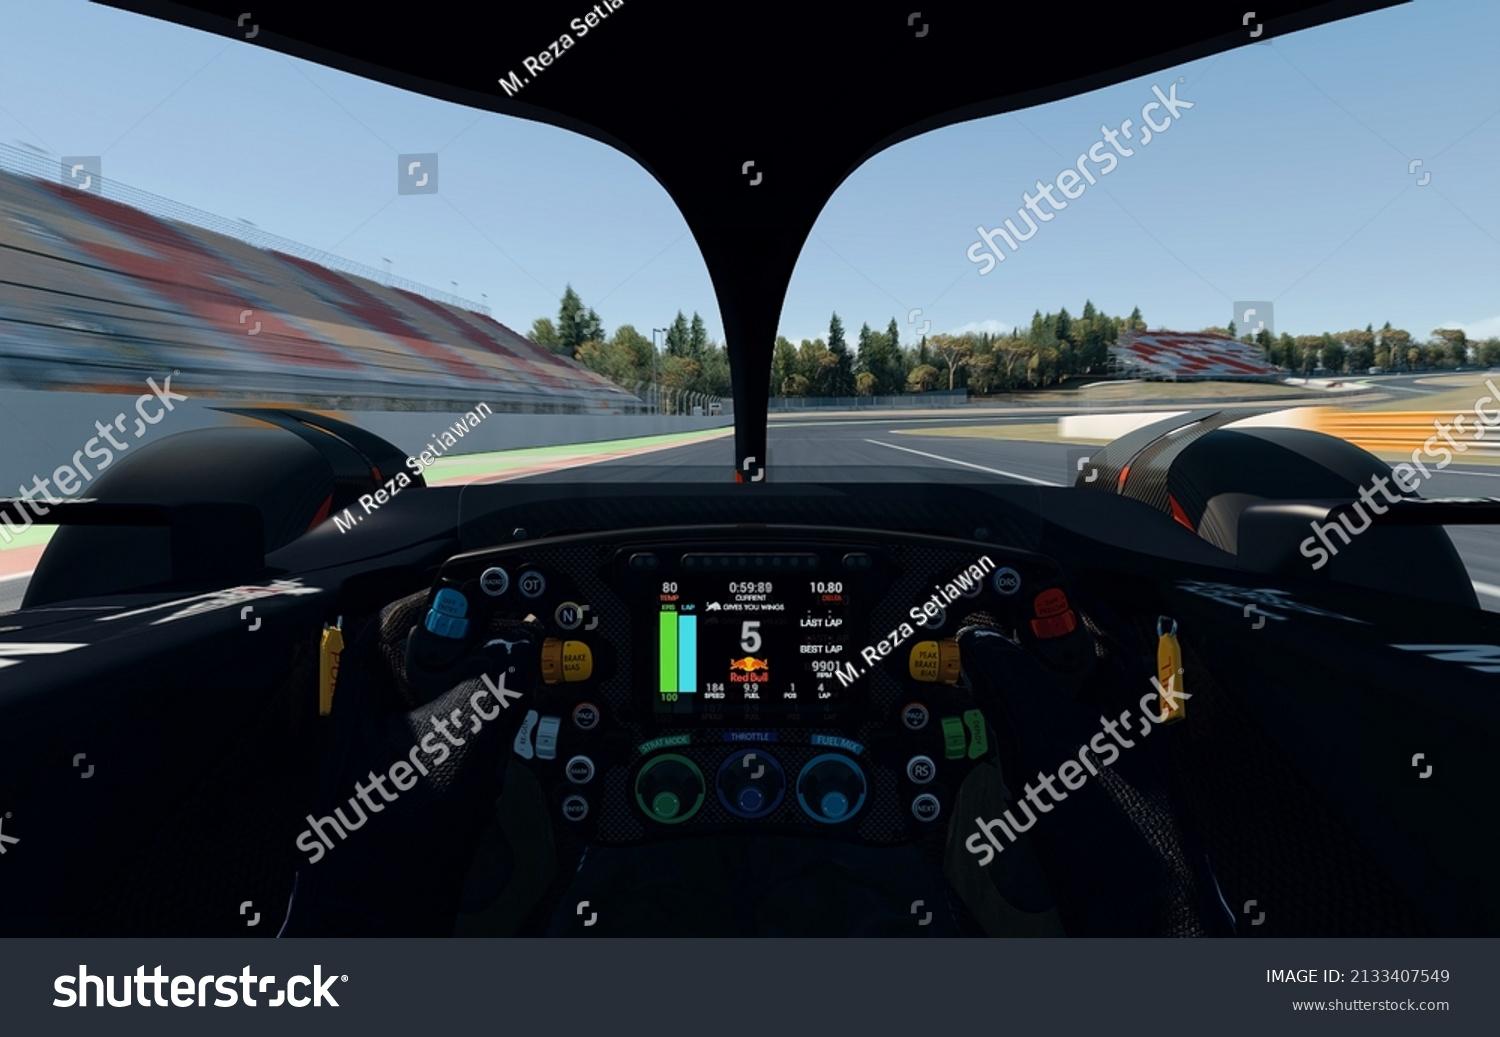 F1 Cockpit Image Browse Stock Photos Vectors